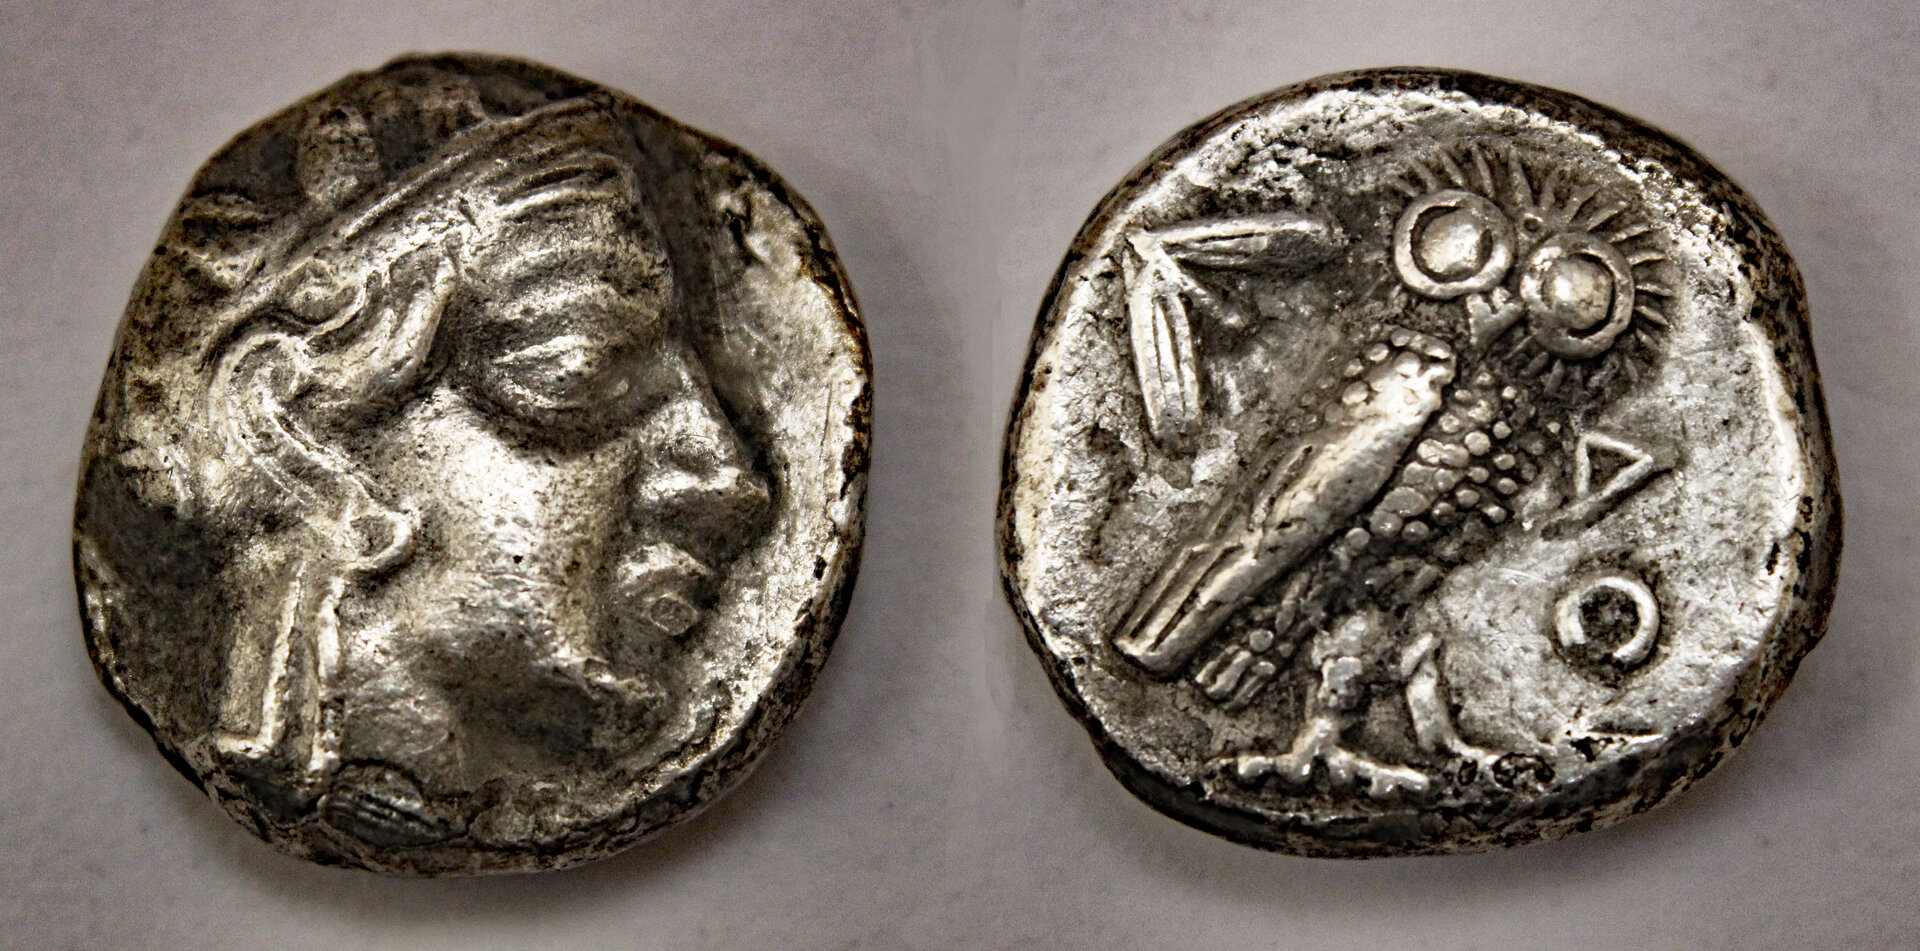 D-Camera Athens Eastern imitation Owl, 4th cen BC, 16.33g Roma 54, 113  5-21-21.jpg